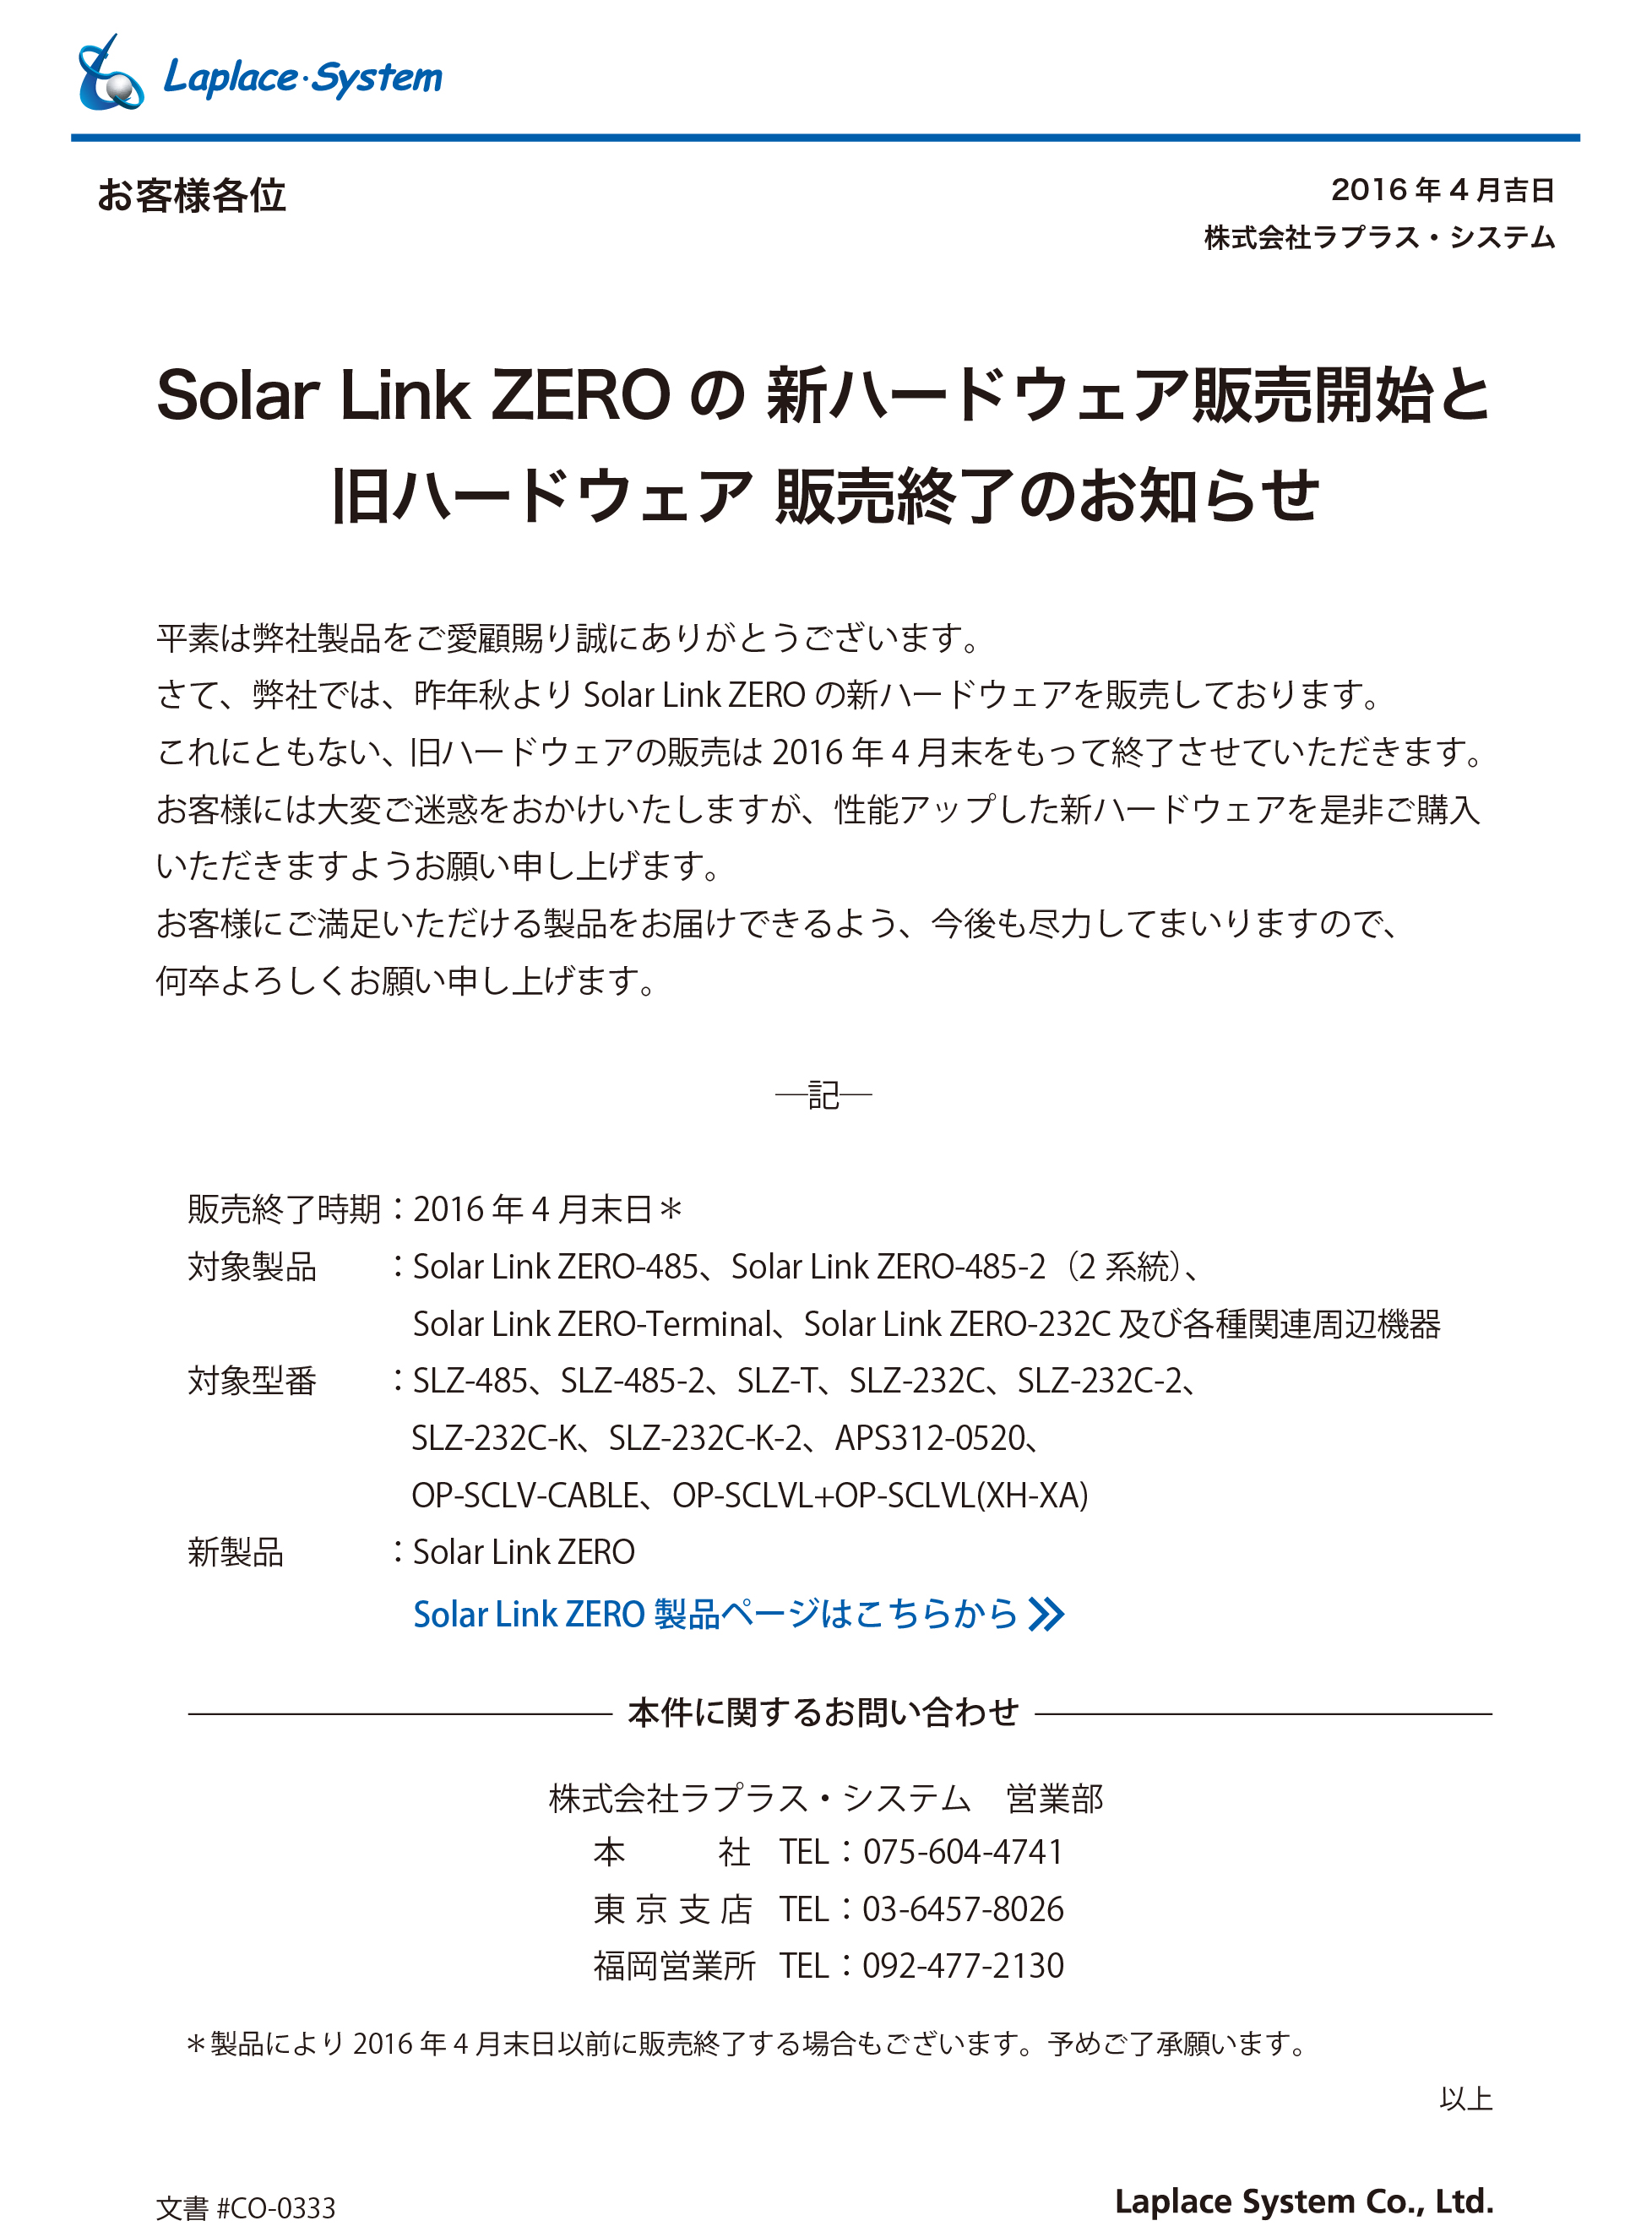 Solar Link ZERO 旧ハード販売終了のお知らせ